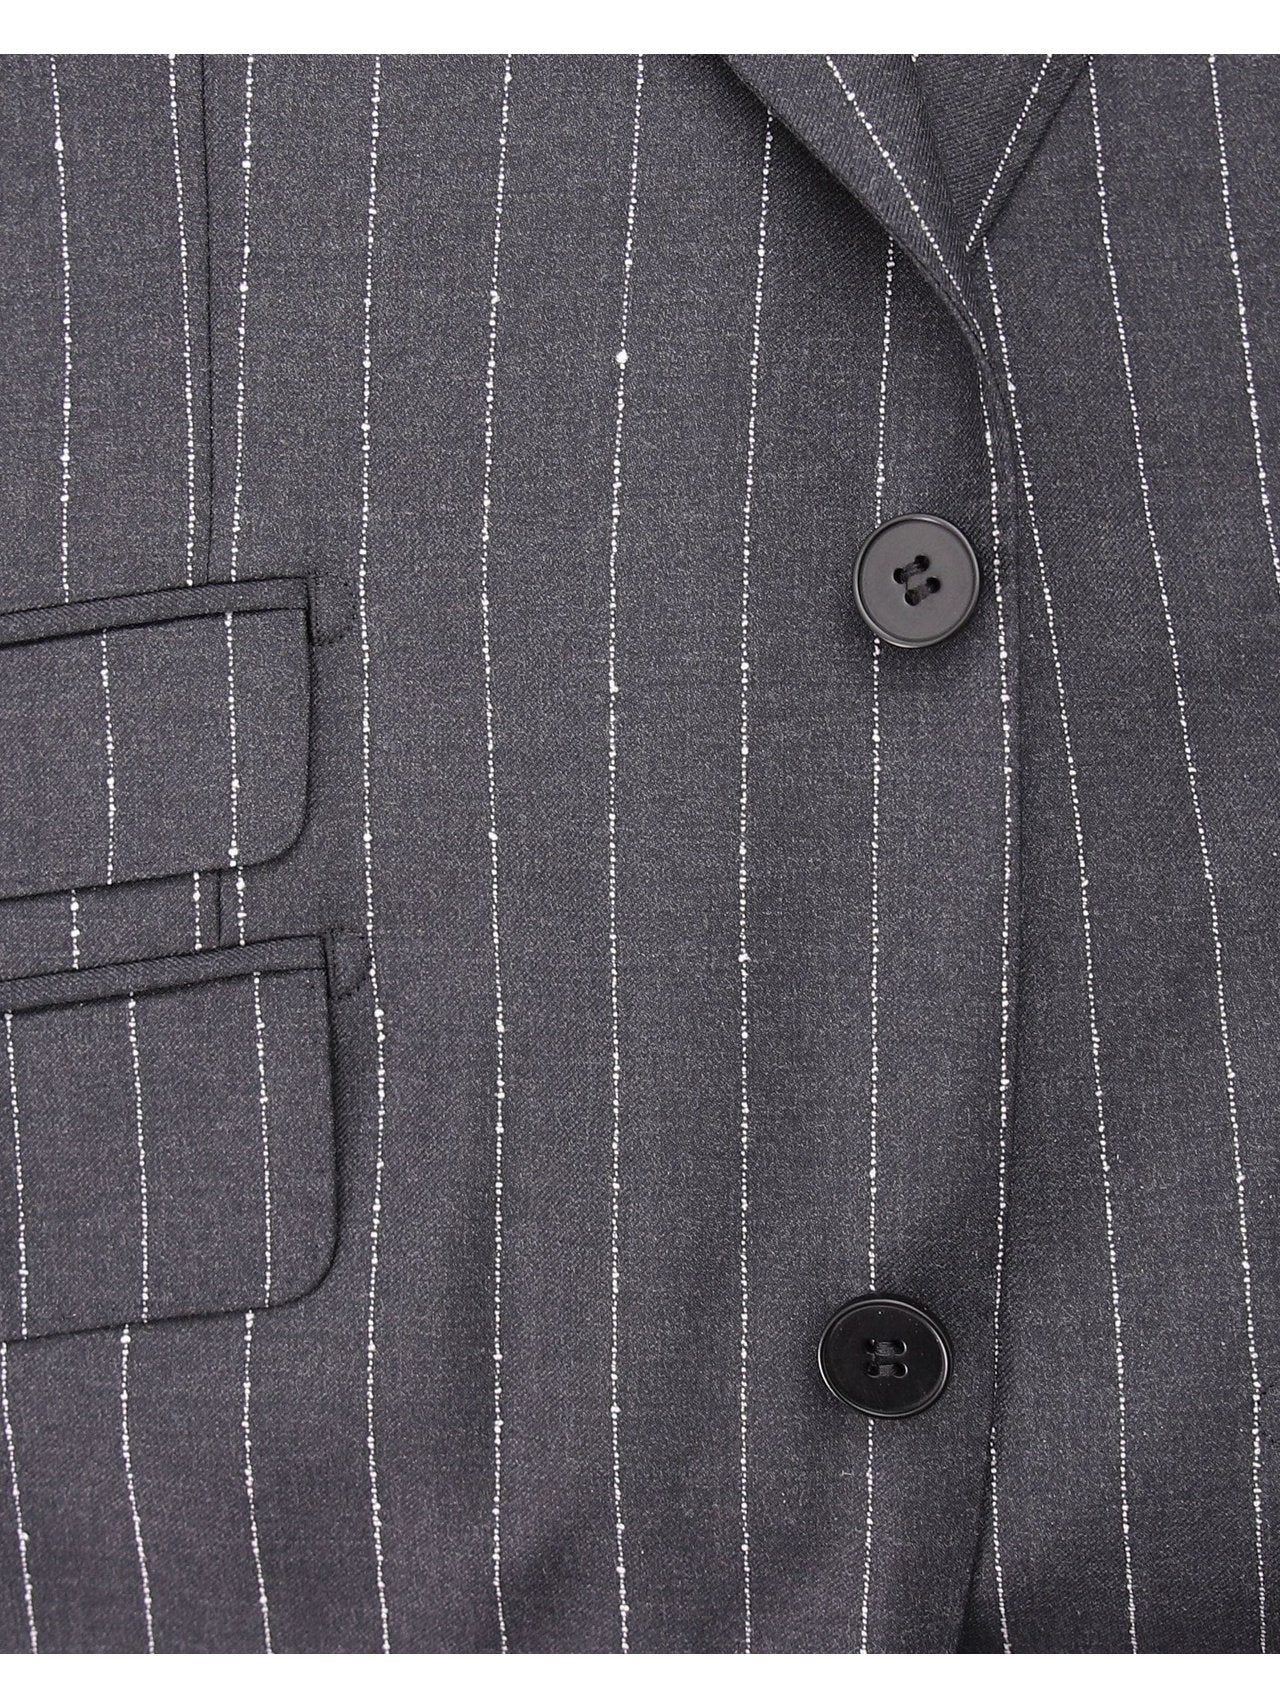 Napoli SUITS Napoli Mens Charcoal Pinstripe 100% Italian Wool Slim Fit Suit With Peak Lapels